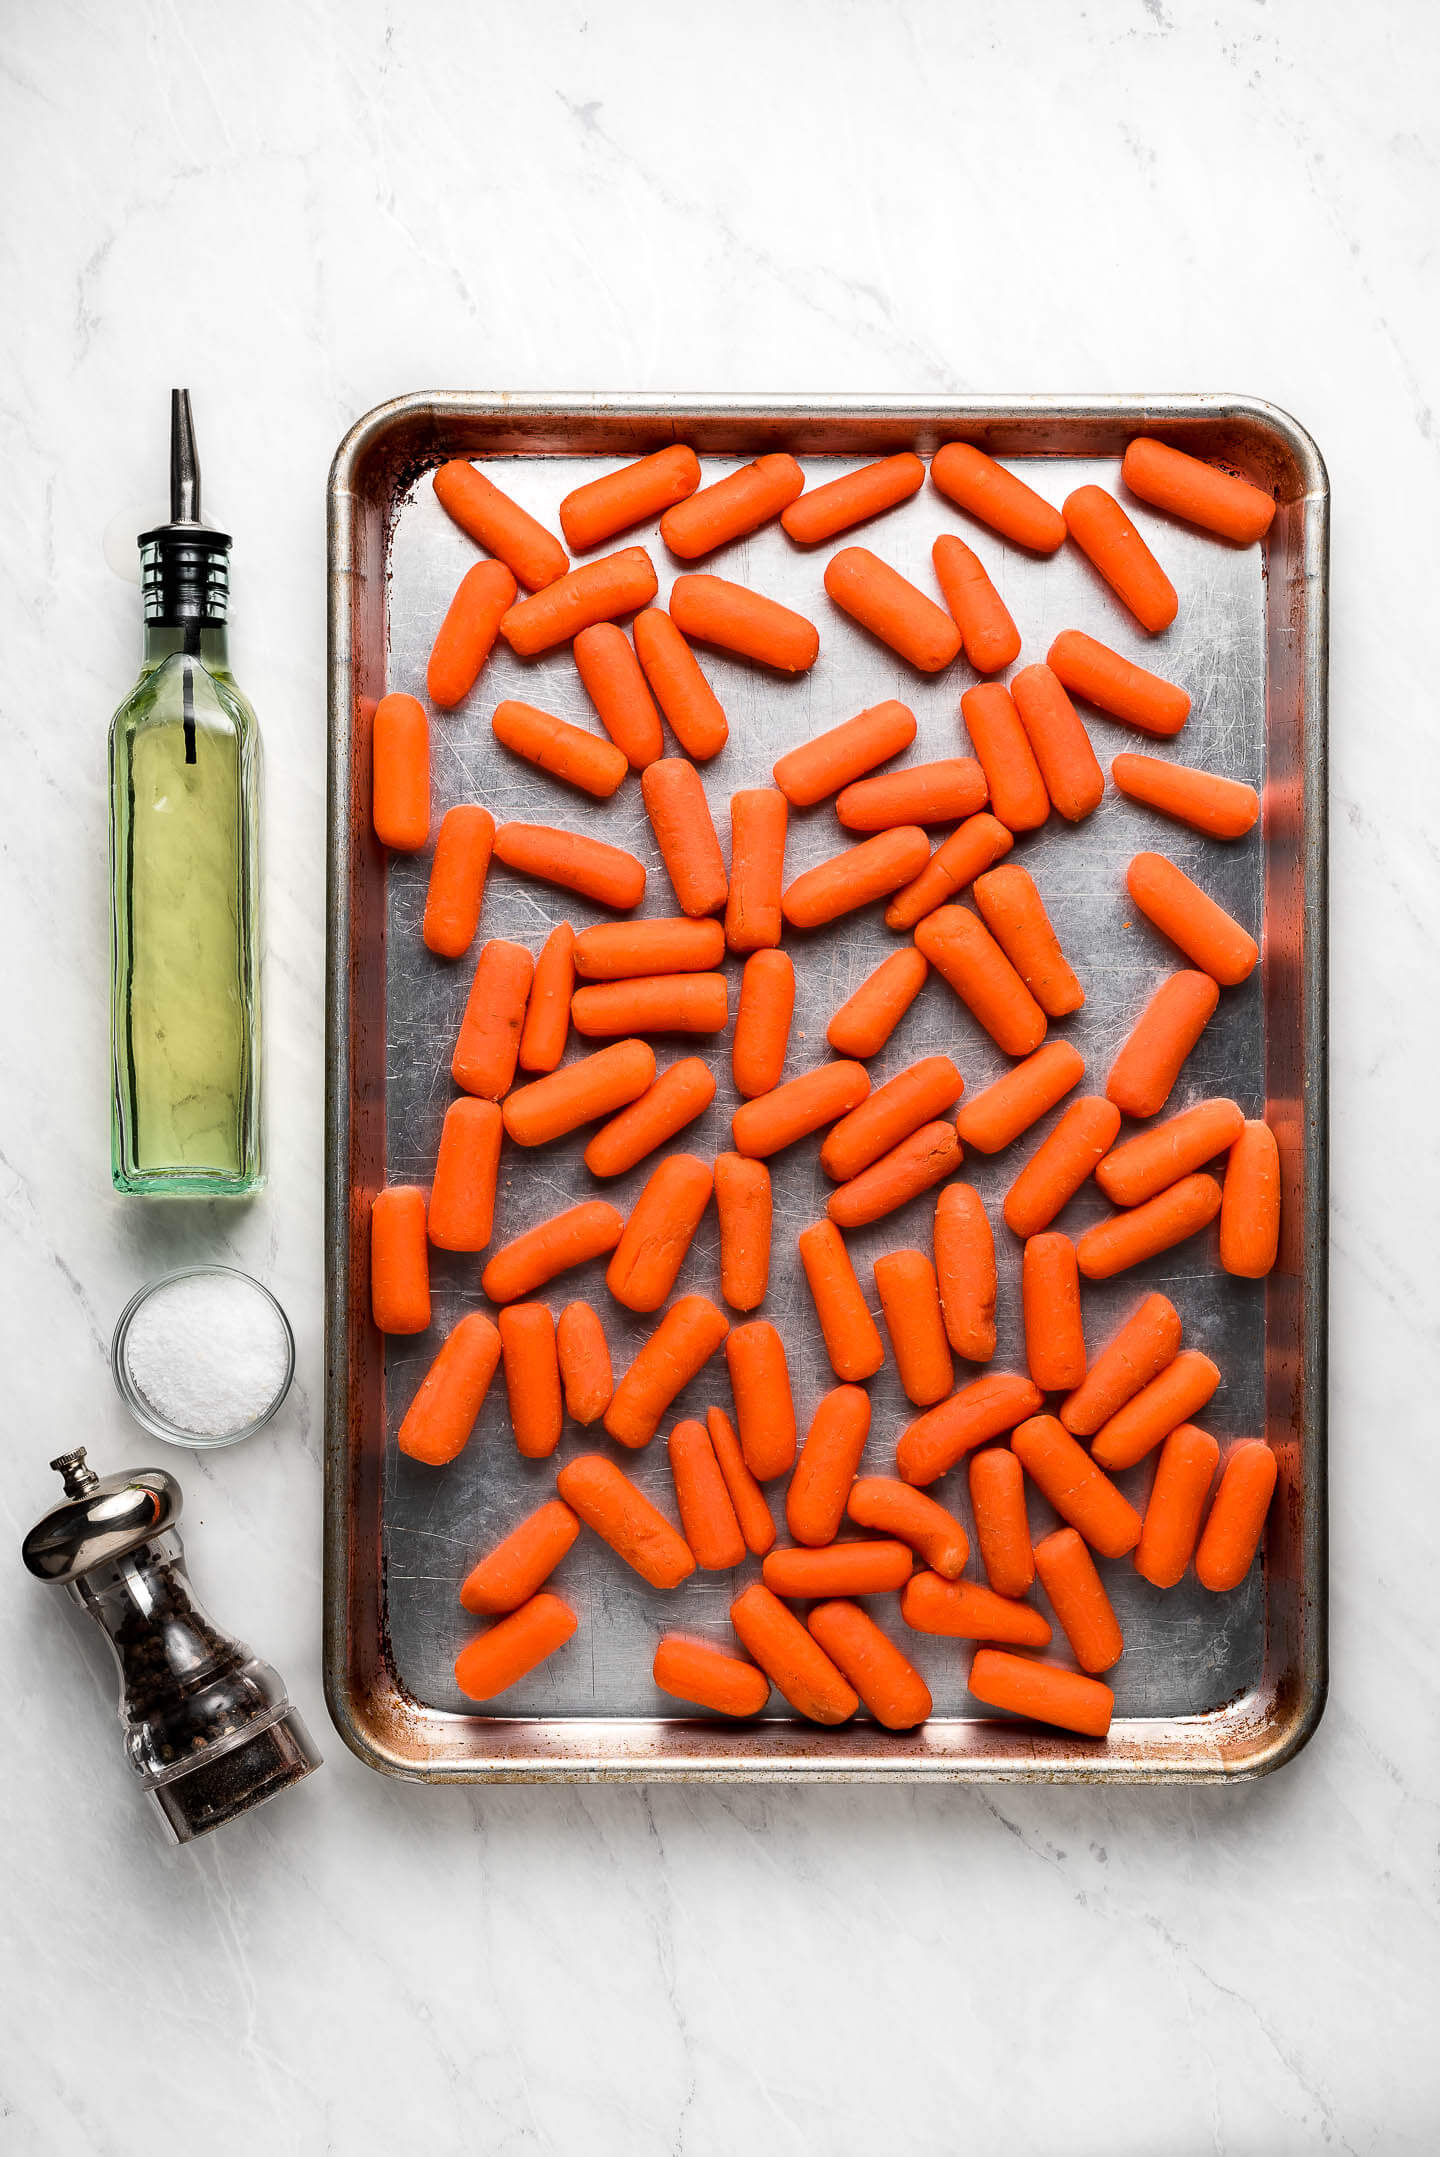 Baby carrots on a baking sheet, a bottle of oil, bowl of salt, and pepper grinder.